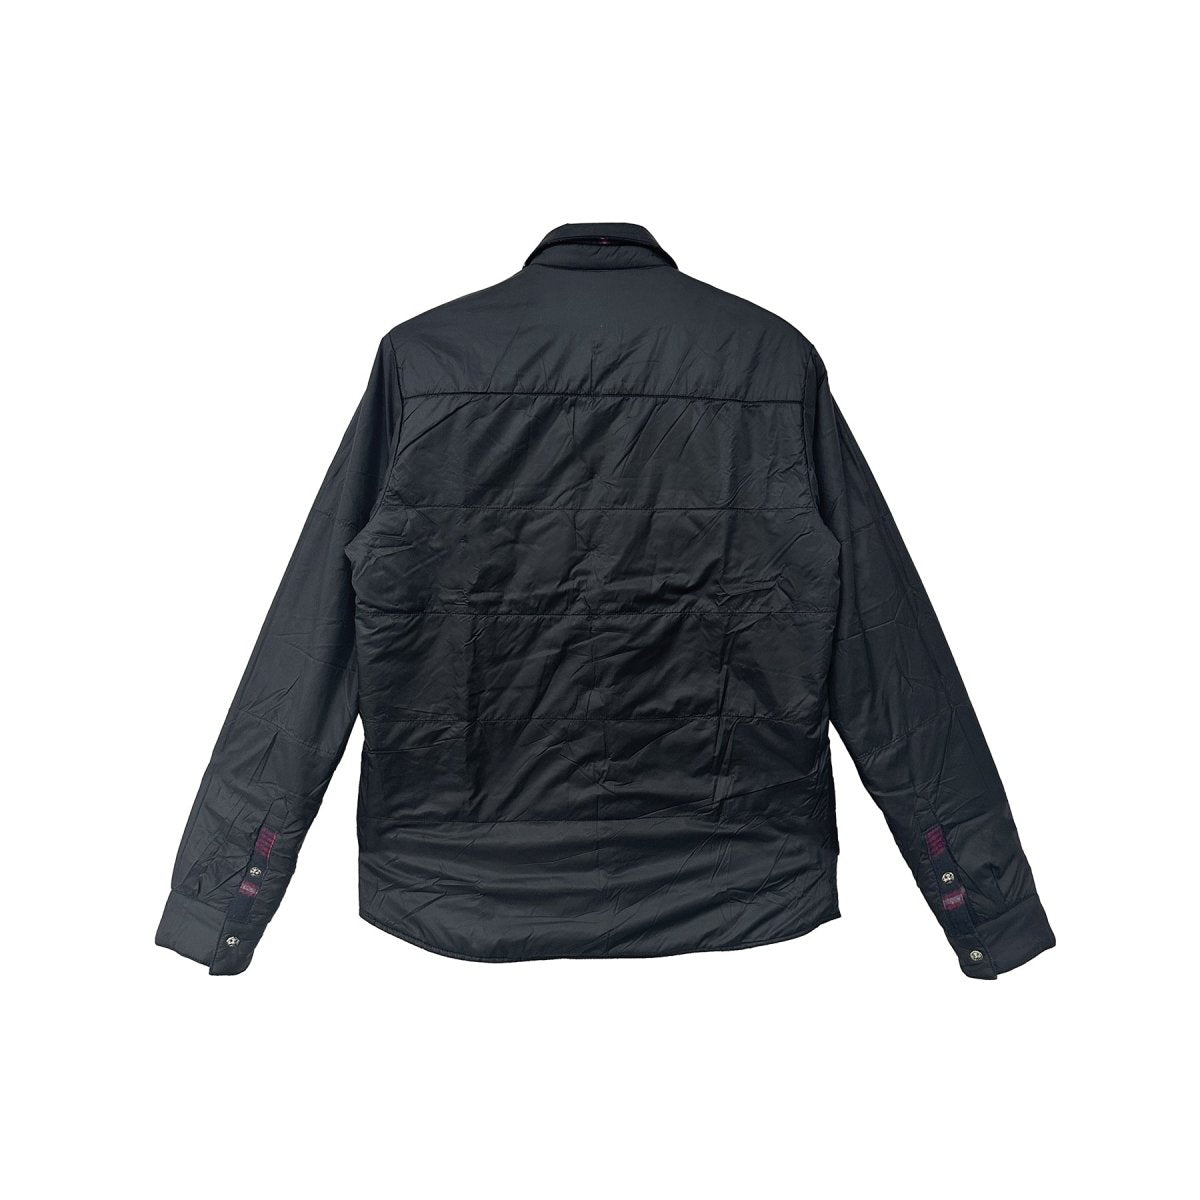 Chrome Hearts Checkered Cotton Reversible Shirt Jacket - SHENGLI ROAD MARKET